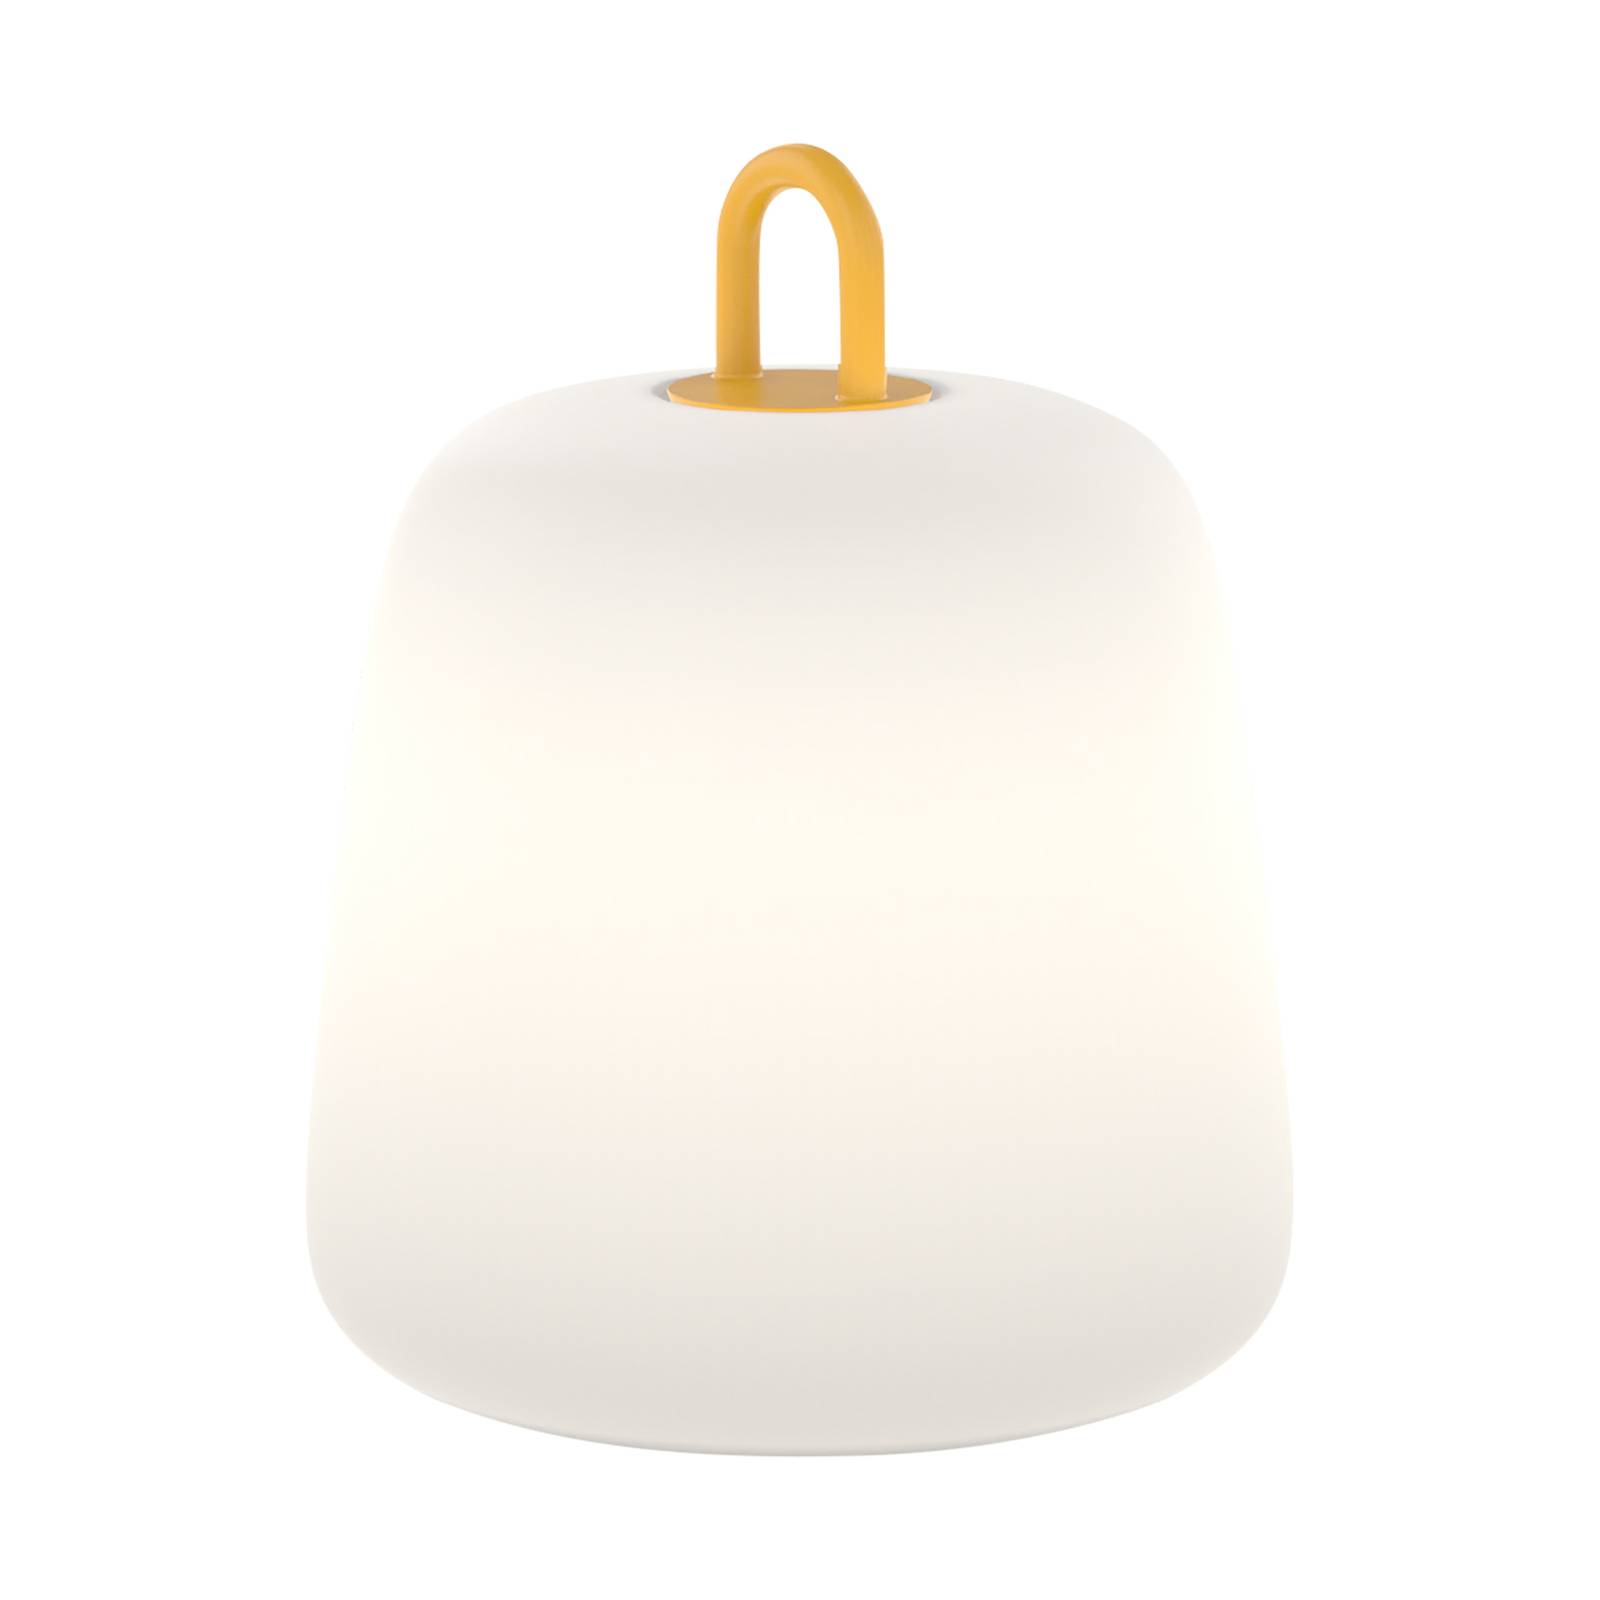 Wever & ducré lighting wever & ducré costa 2.0 led dekorációs lámpa opál/sárga